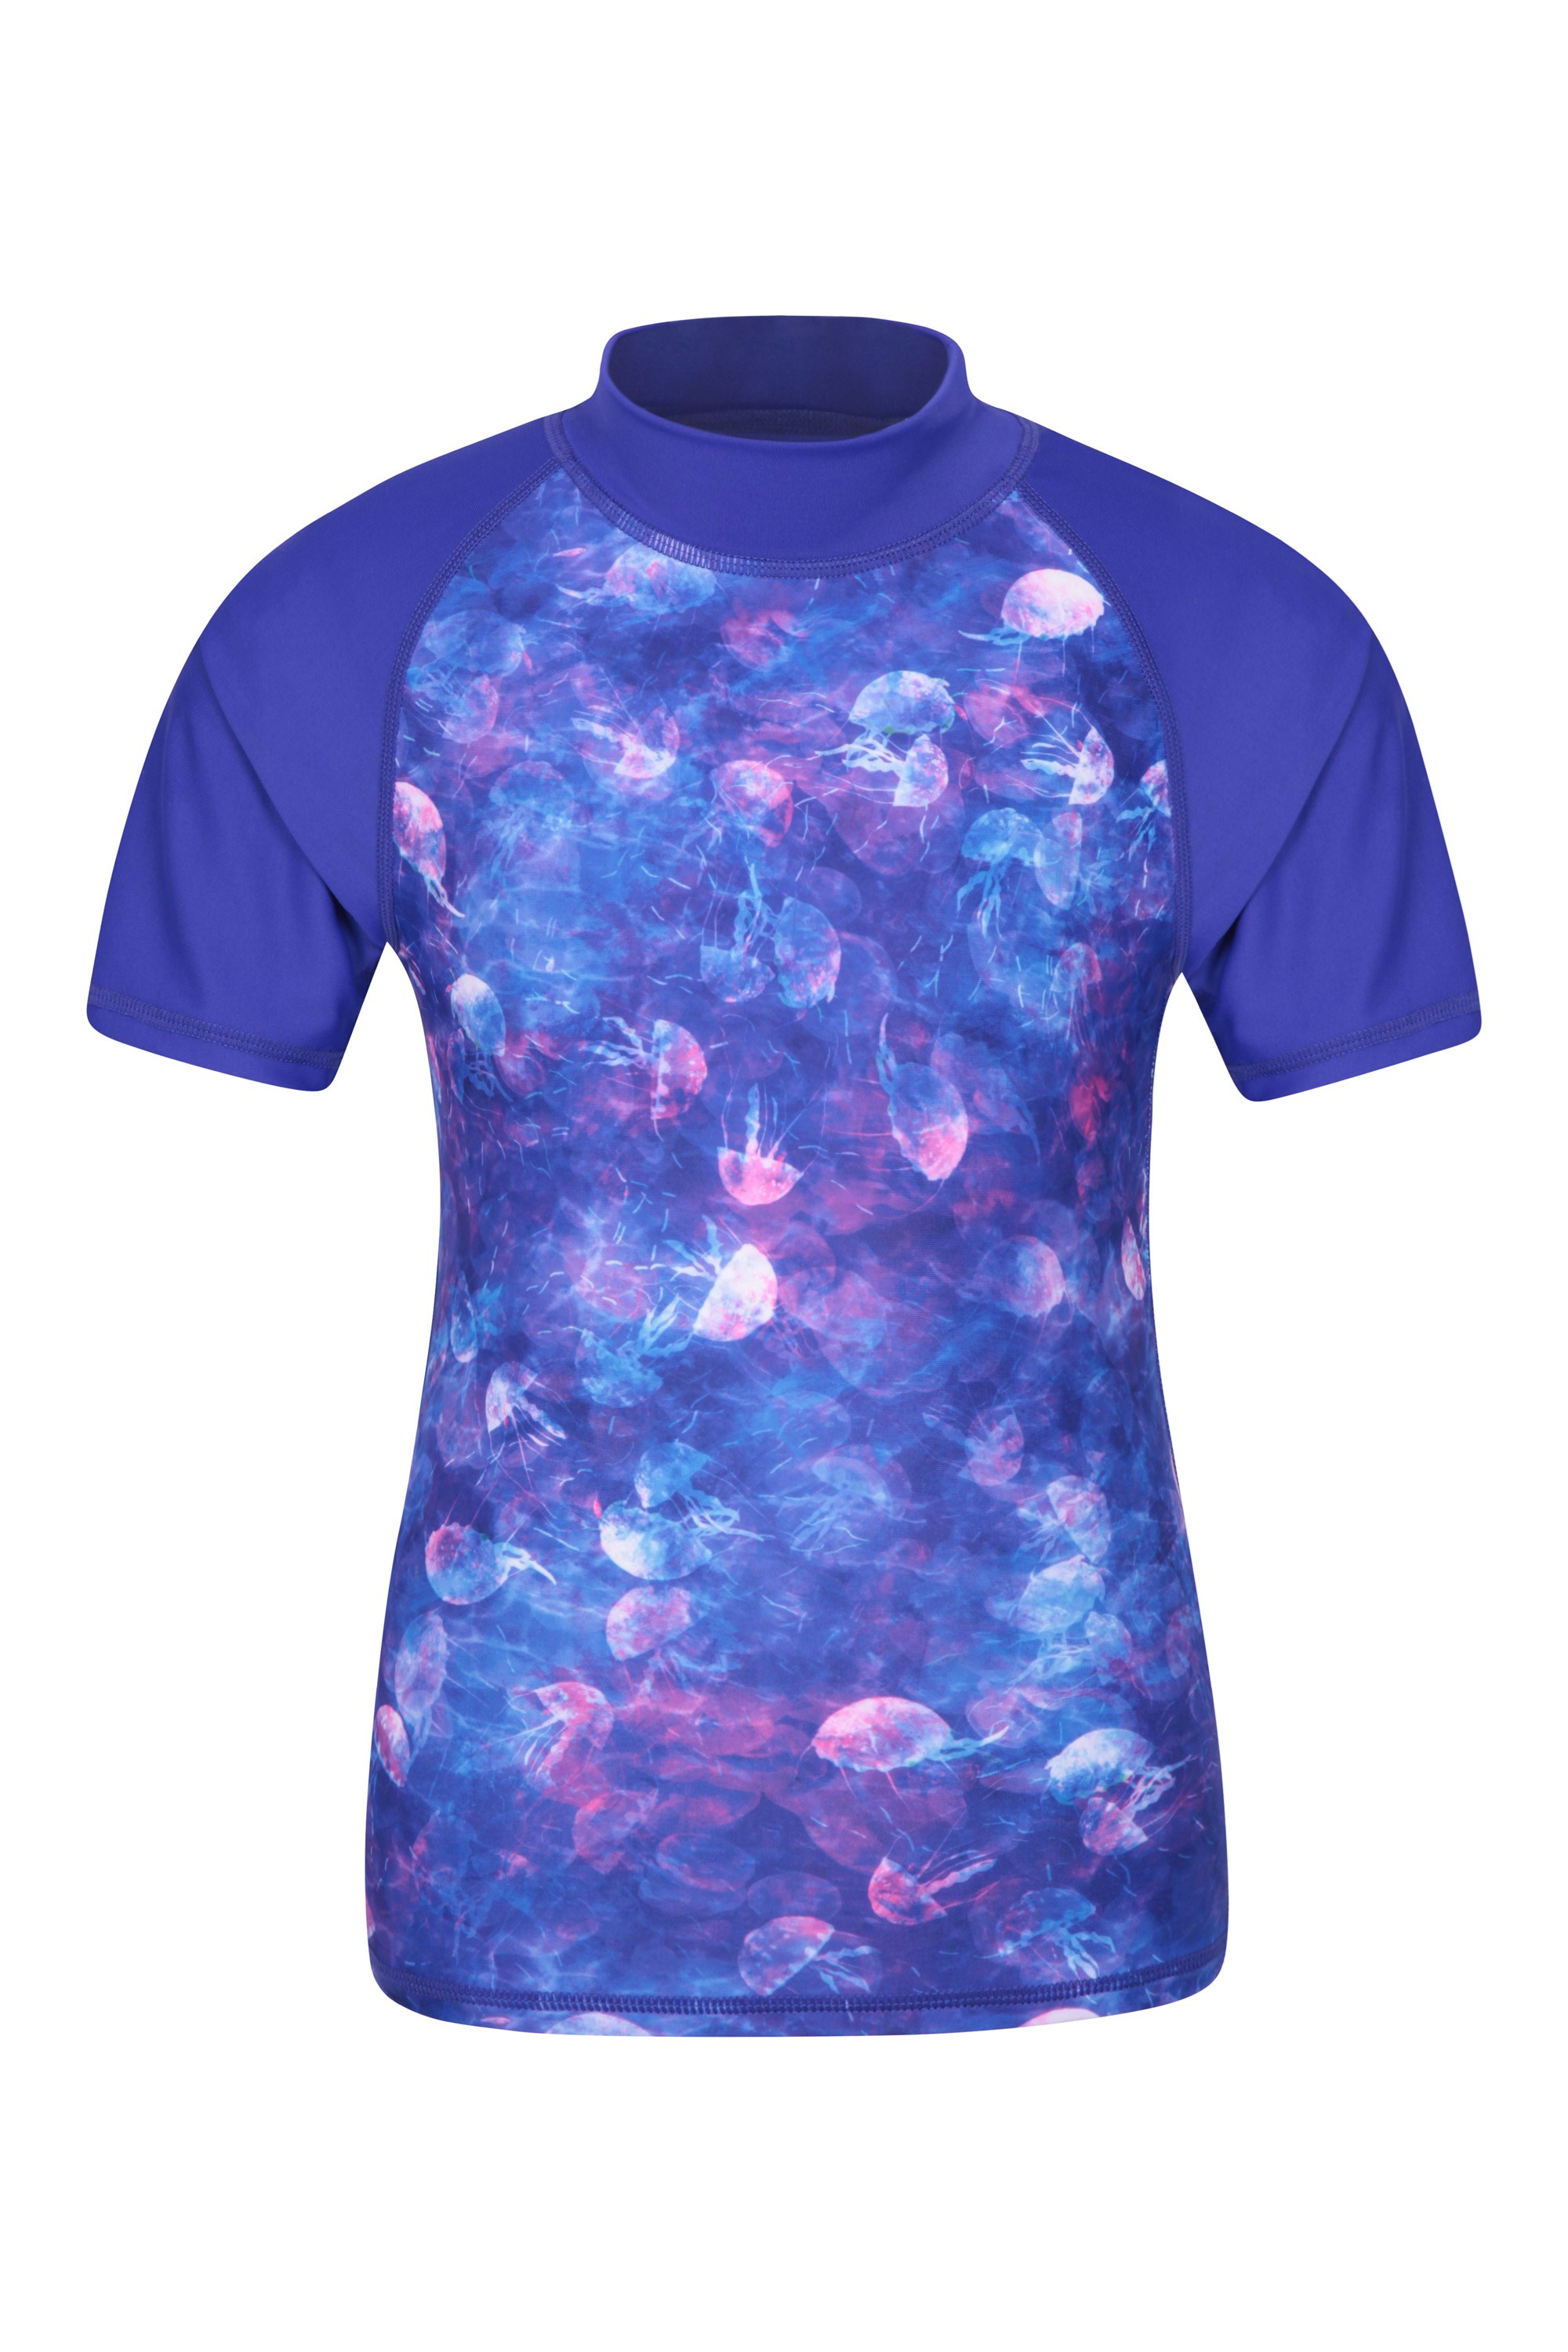 T-Shirt Anti UV Enfants - Violet